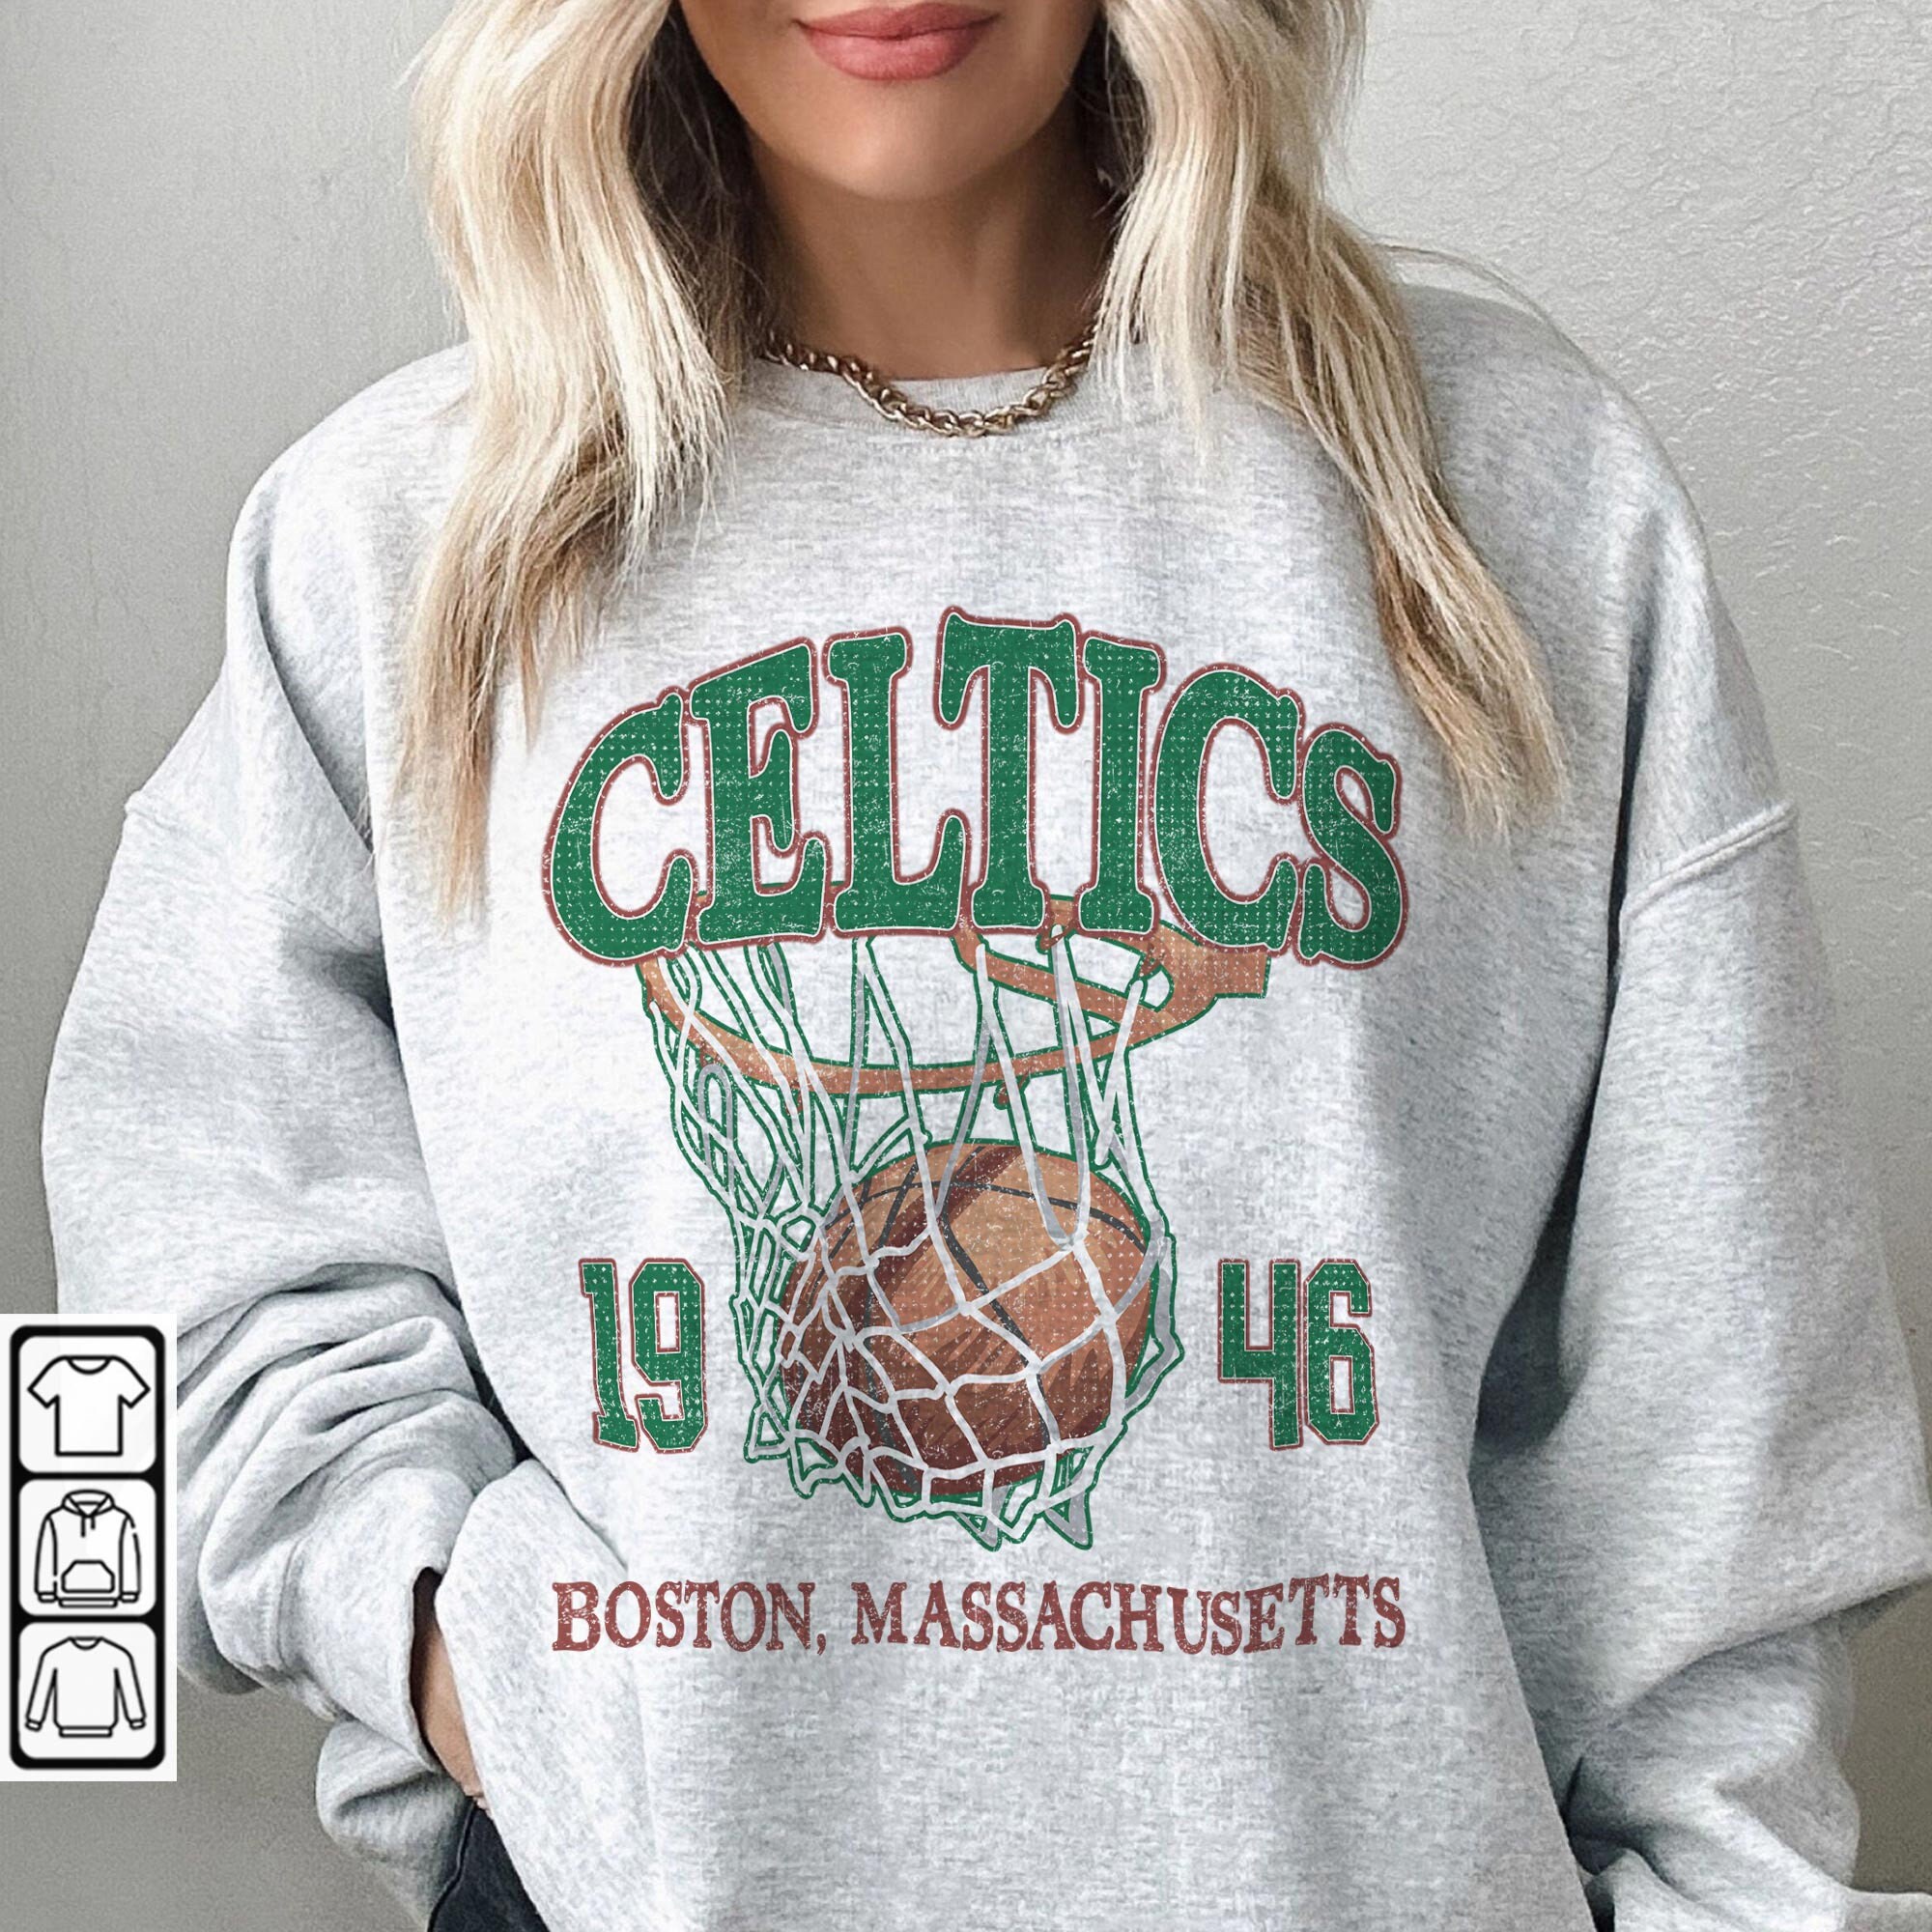 30% OFF The Best Men's Boston Celtics Leather Jacket For Sale – 4